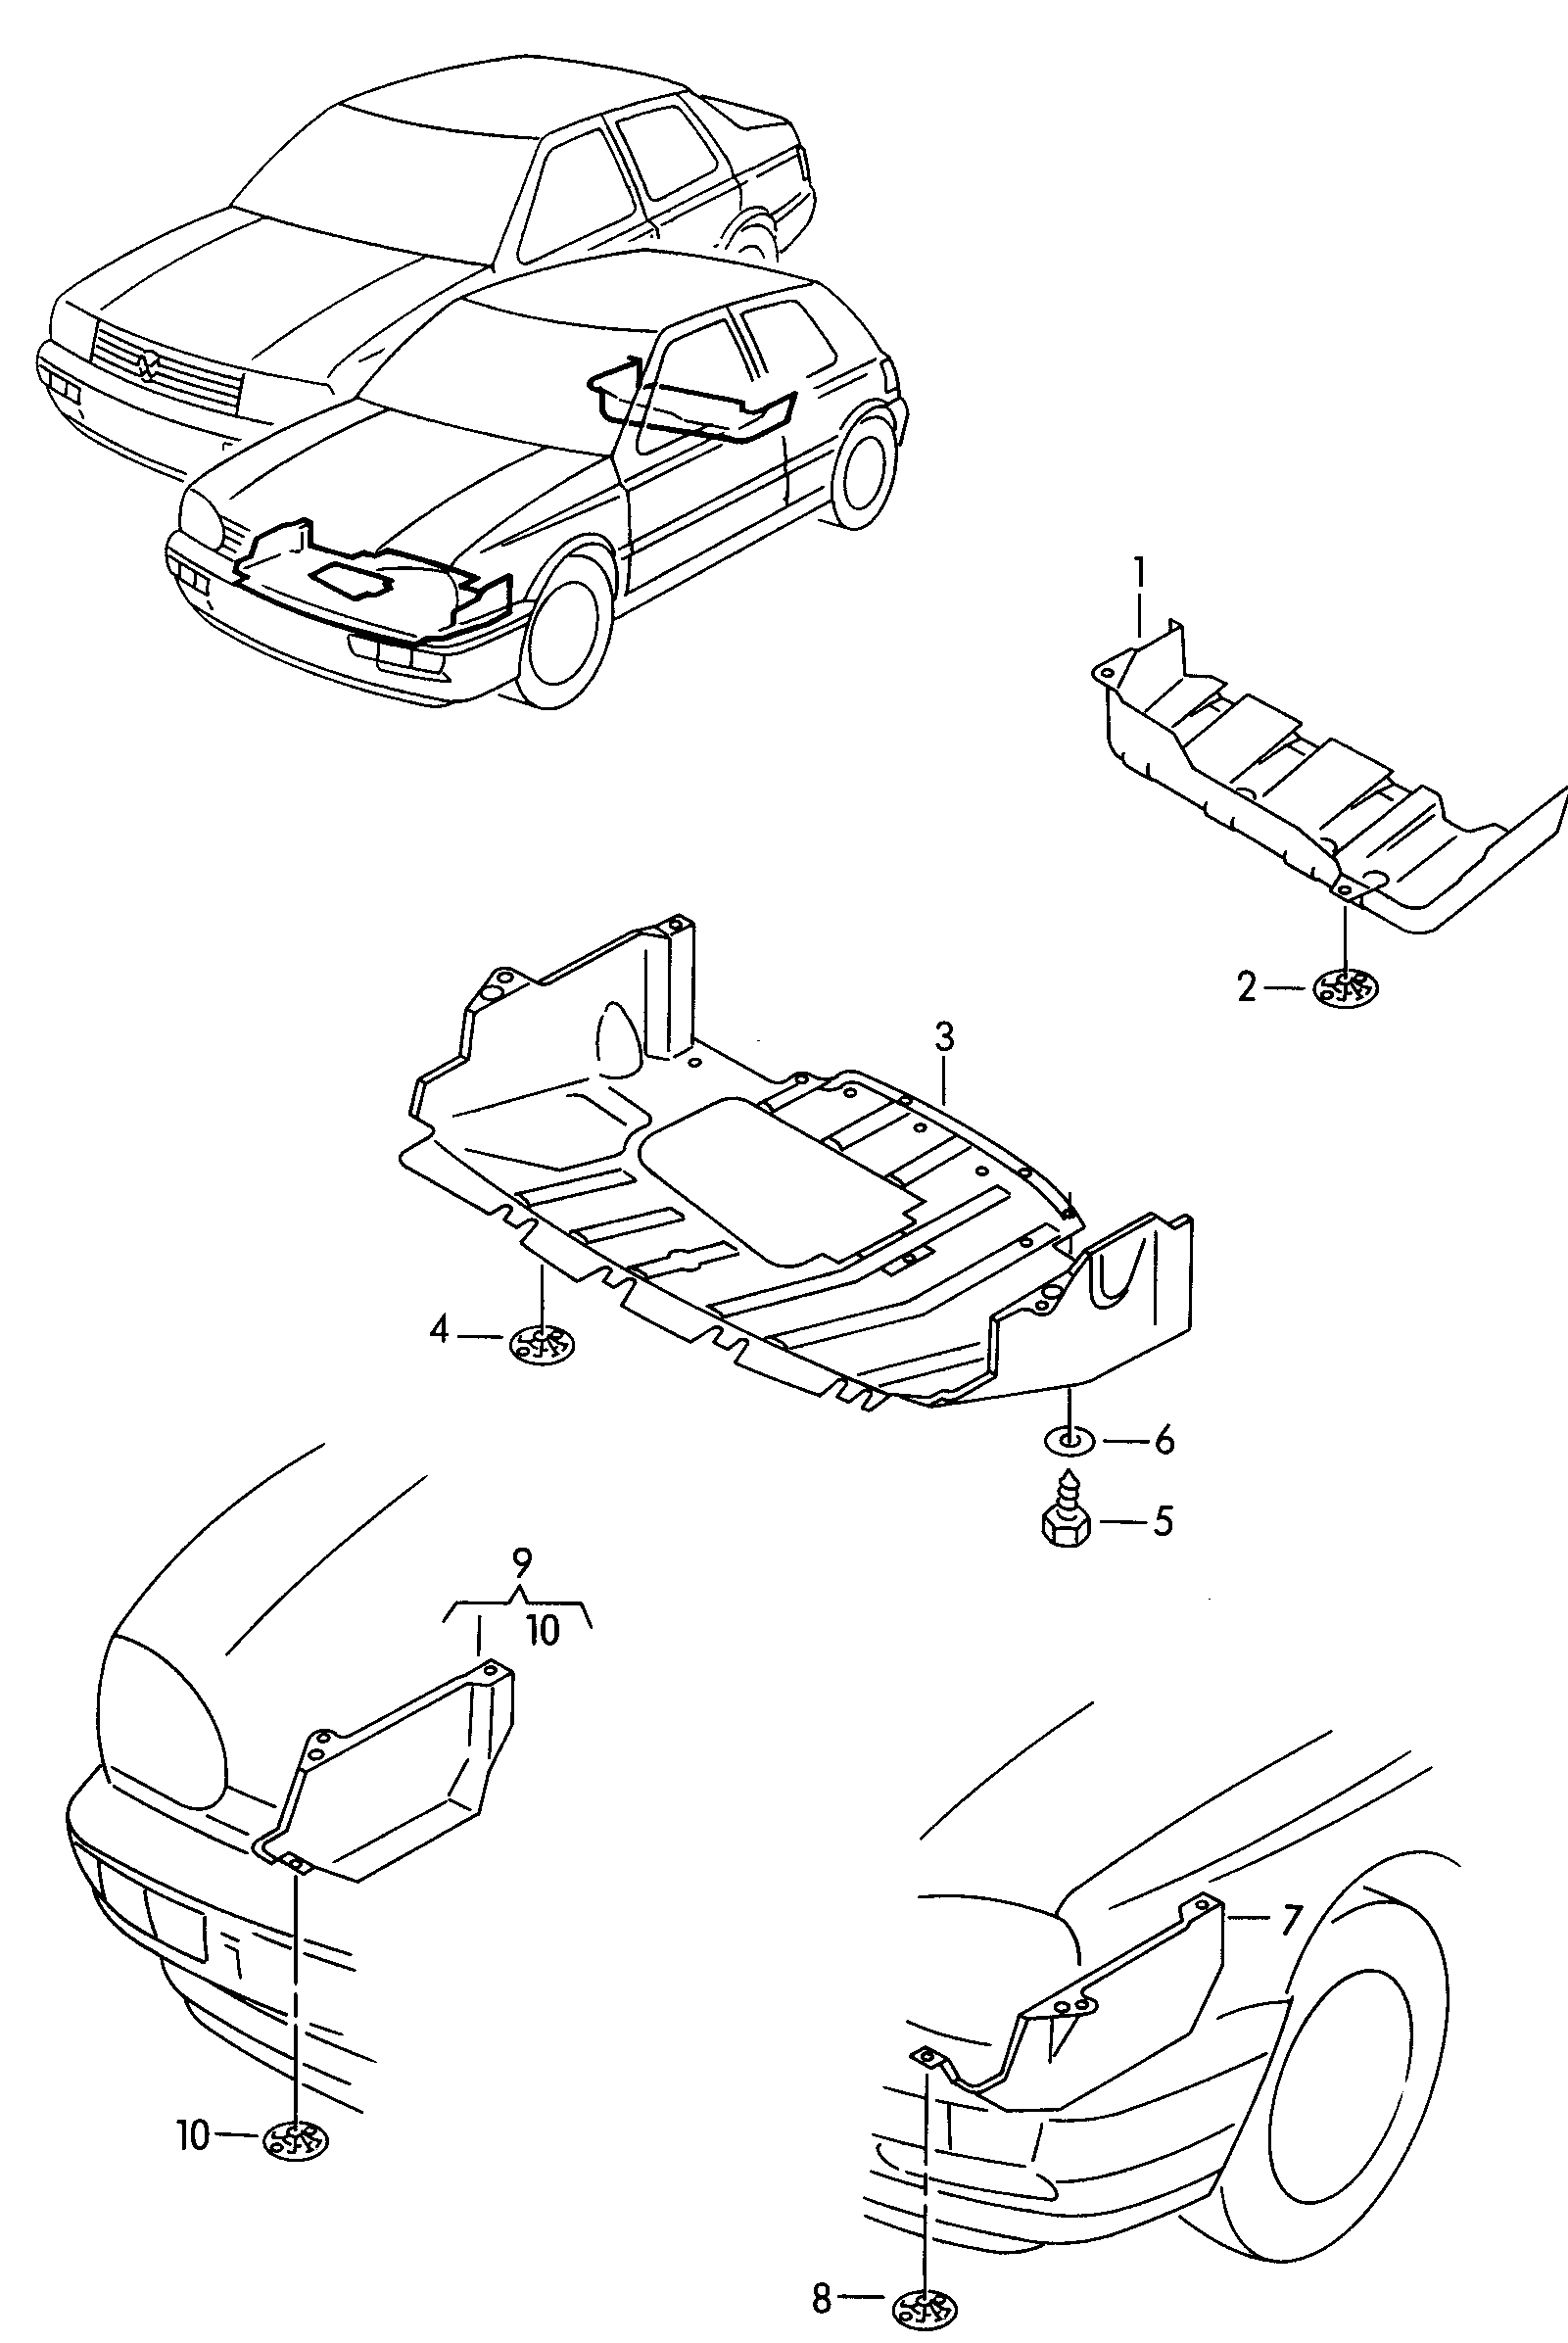 Trimfloor assemblycover - v-belt  - Golf Cabriolet - goc